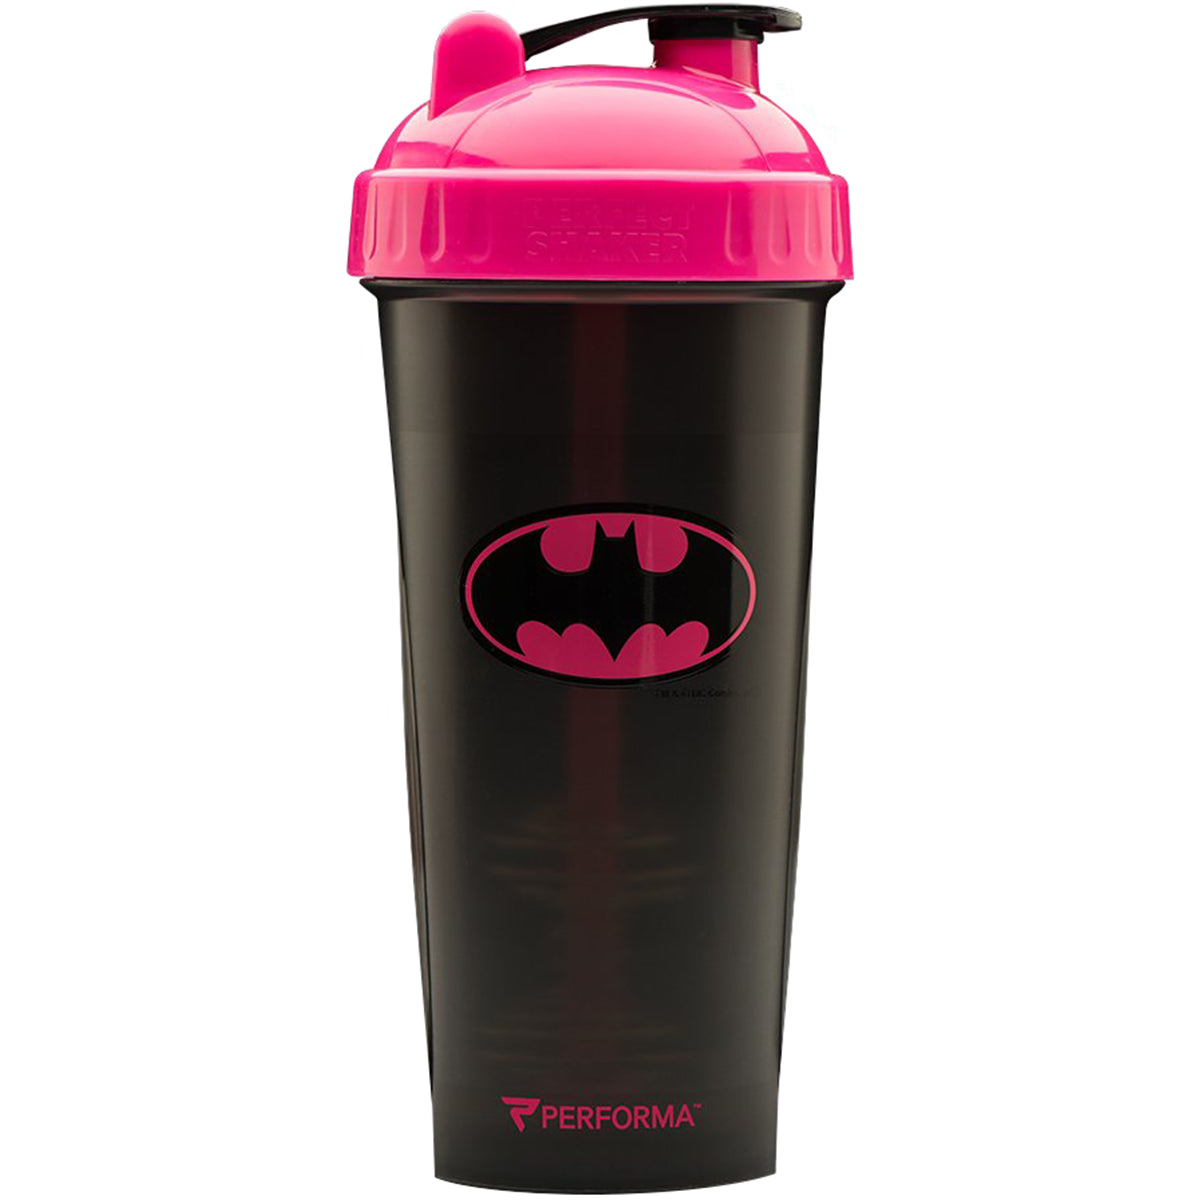 Performa PerfectShaker 28 oz. Hero Shaker Cup - Pink Batman PerfectShaker